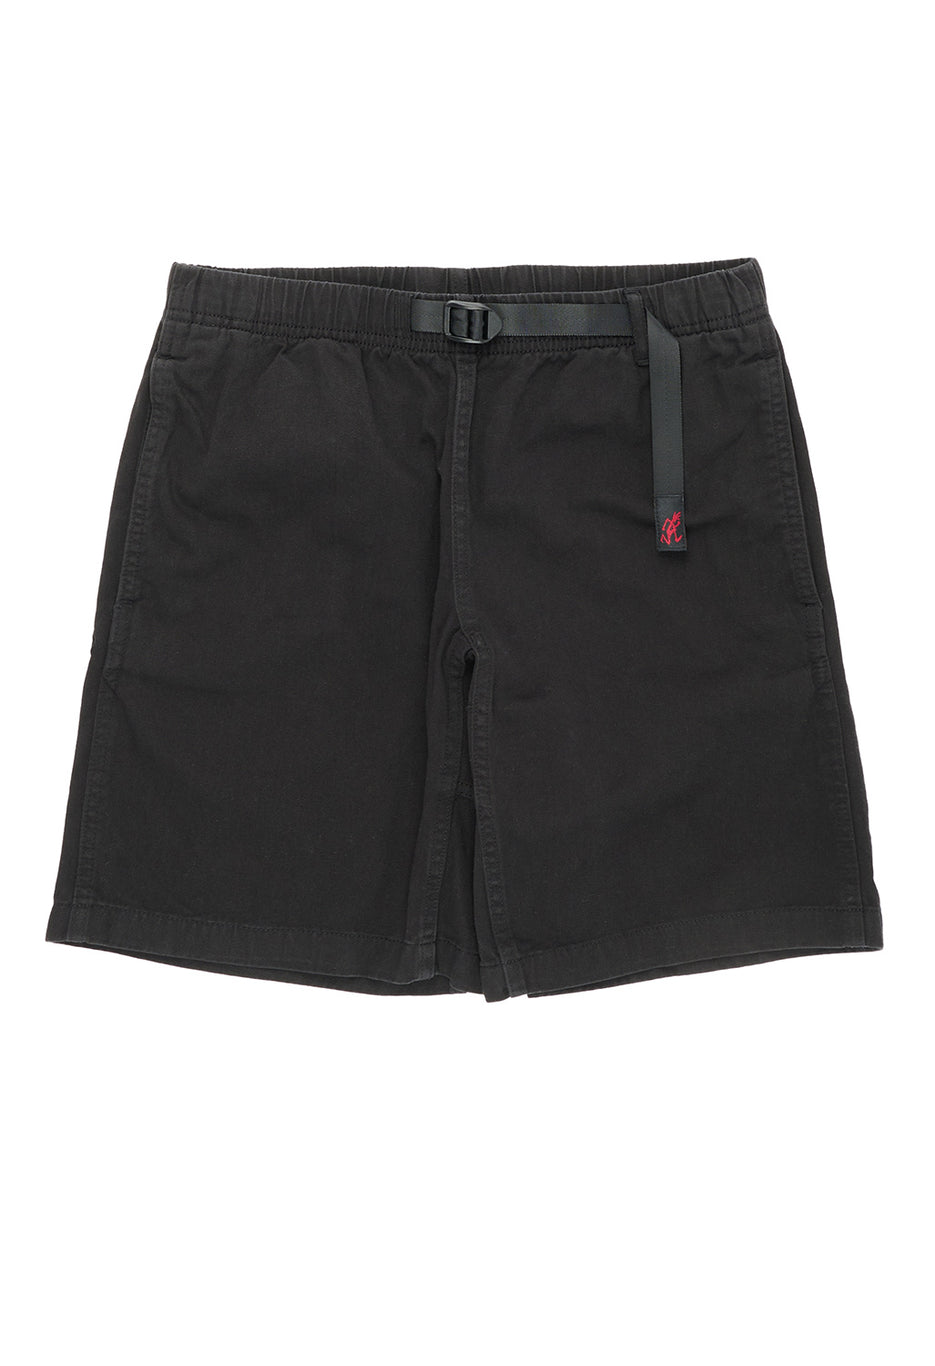 Gramicci Women's G Shorts - Black